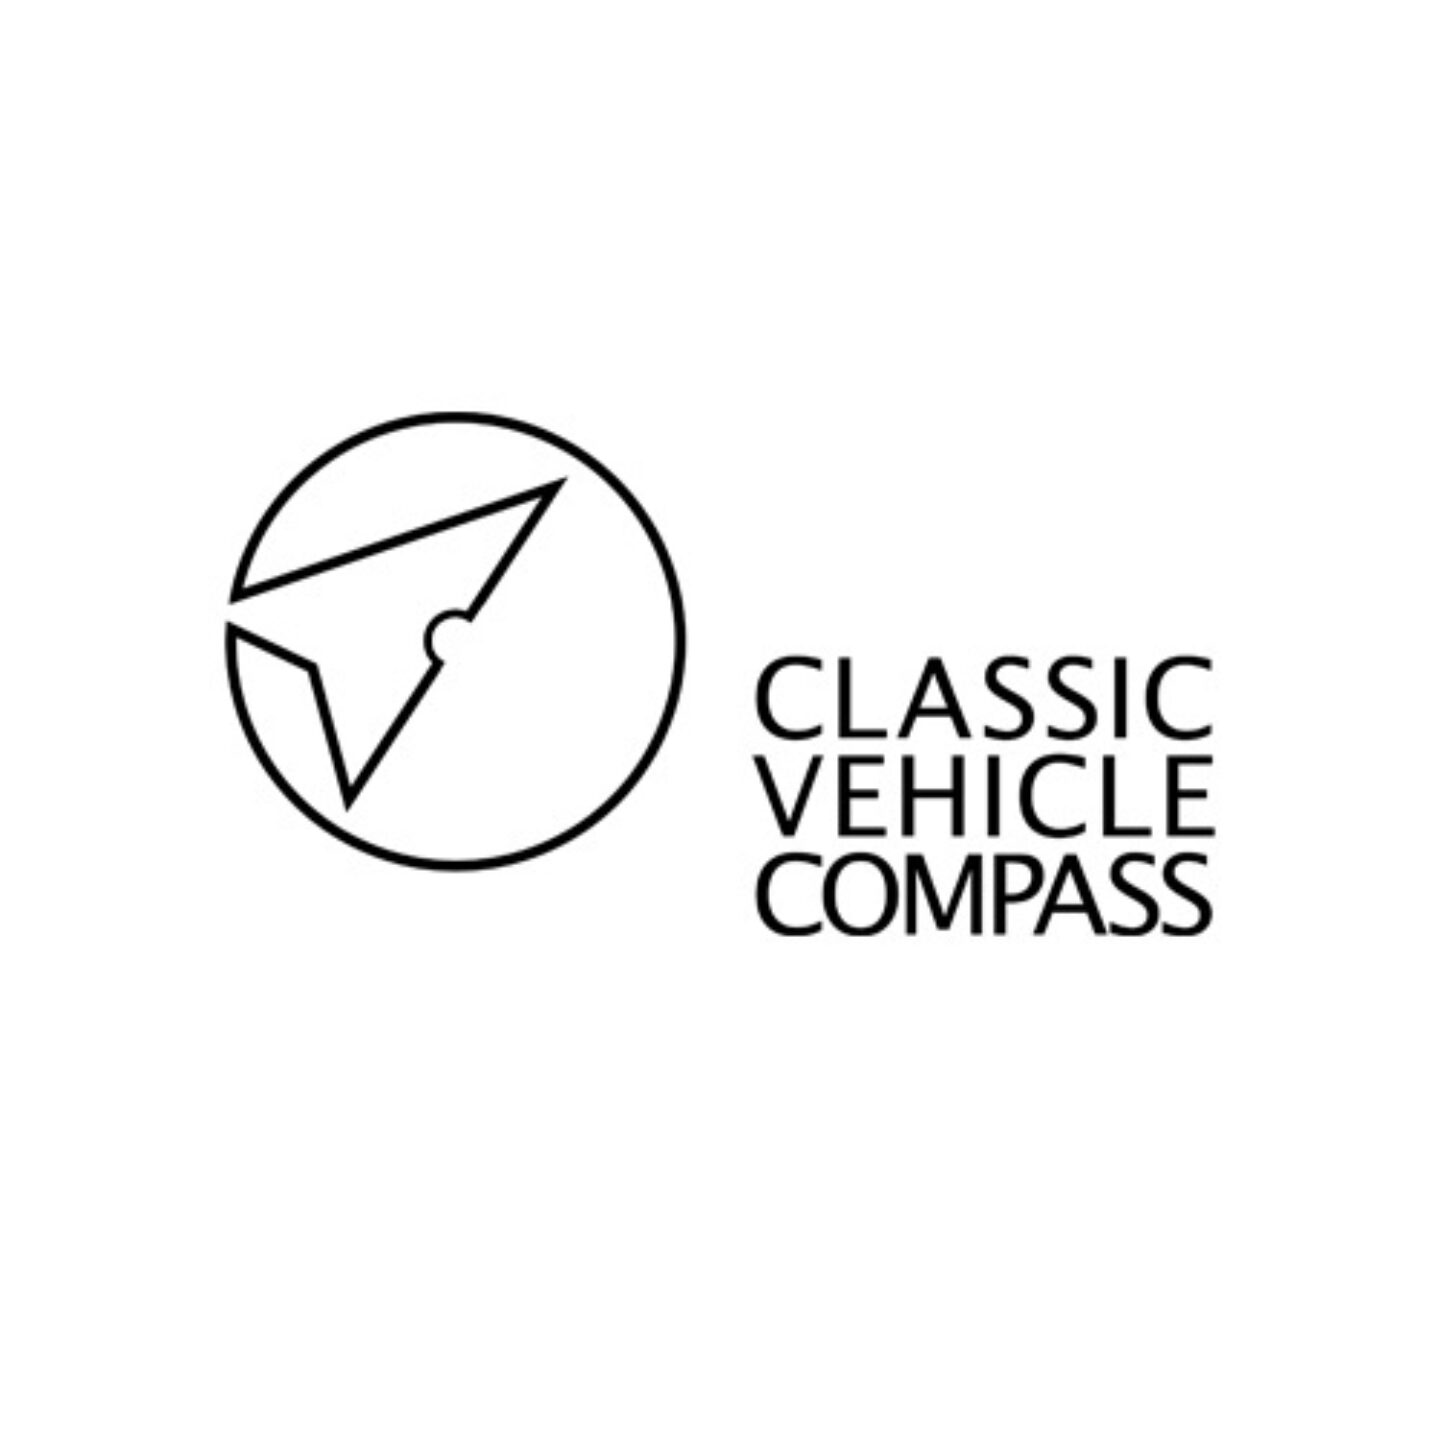 Classi vehicle compass